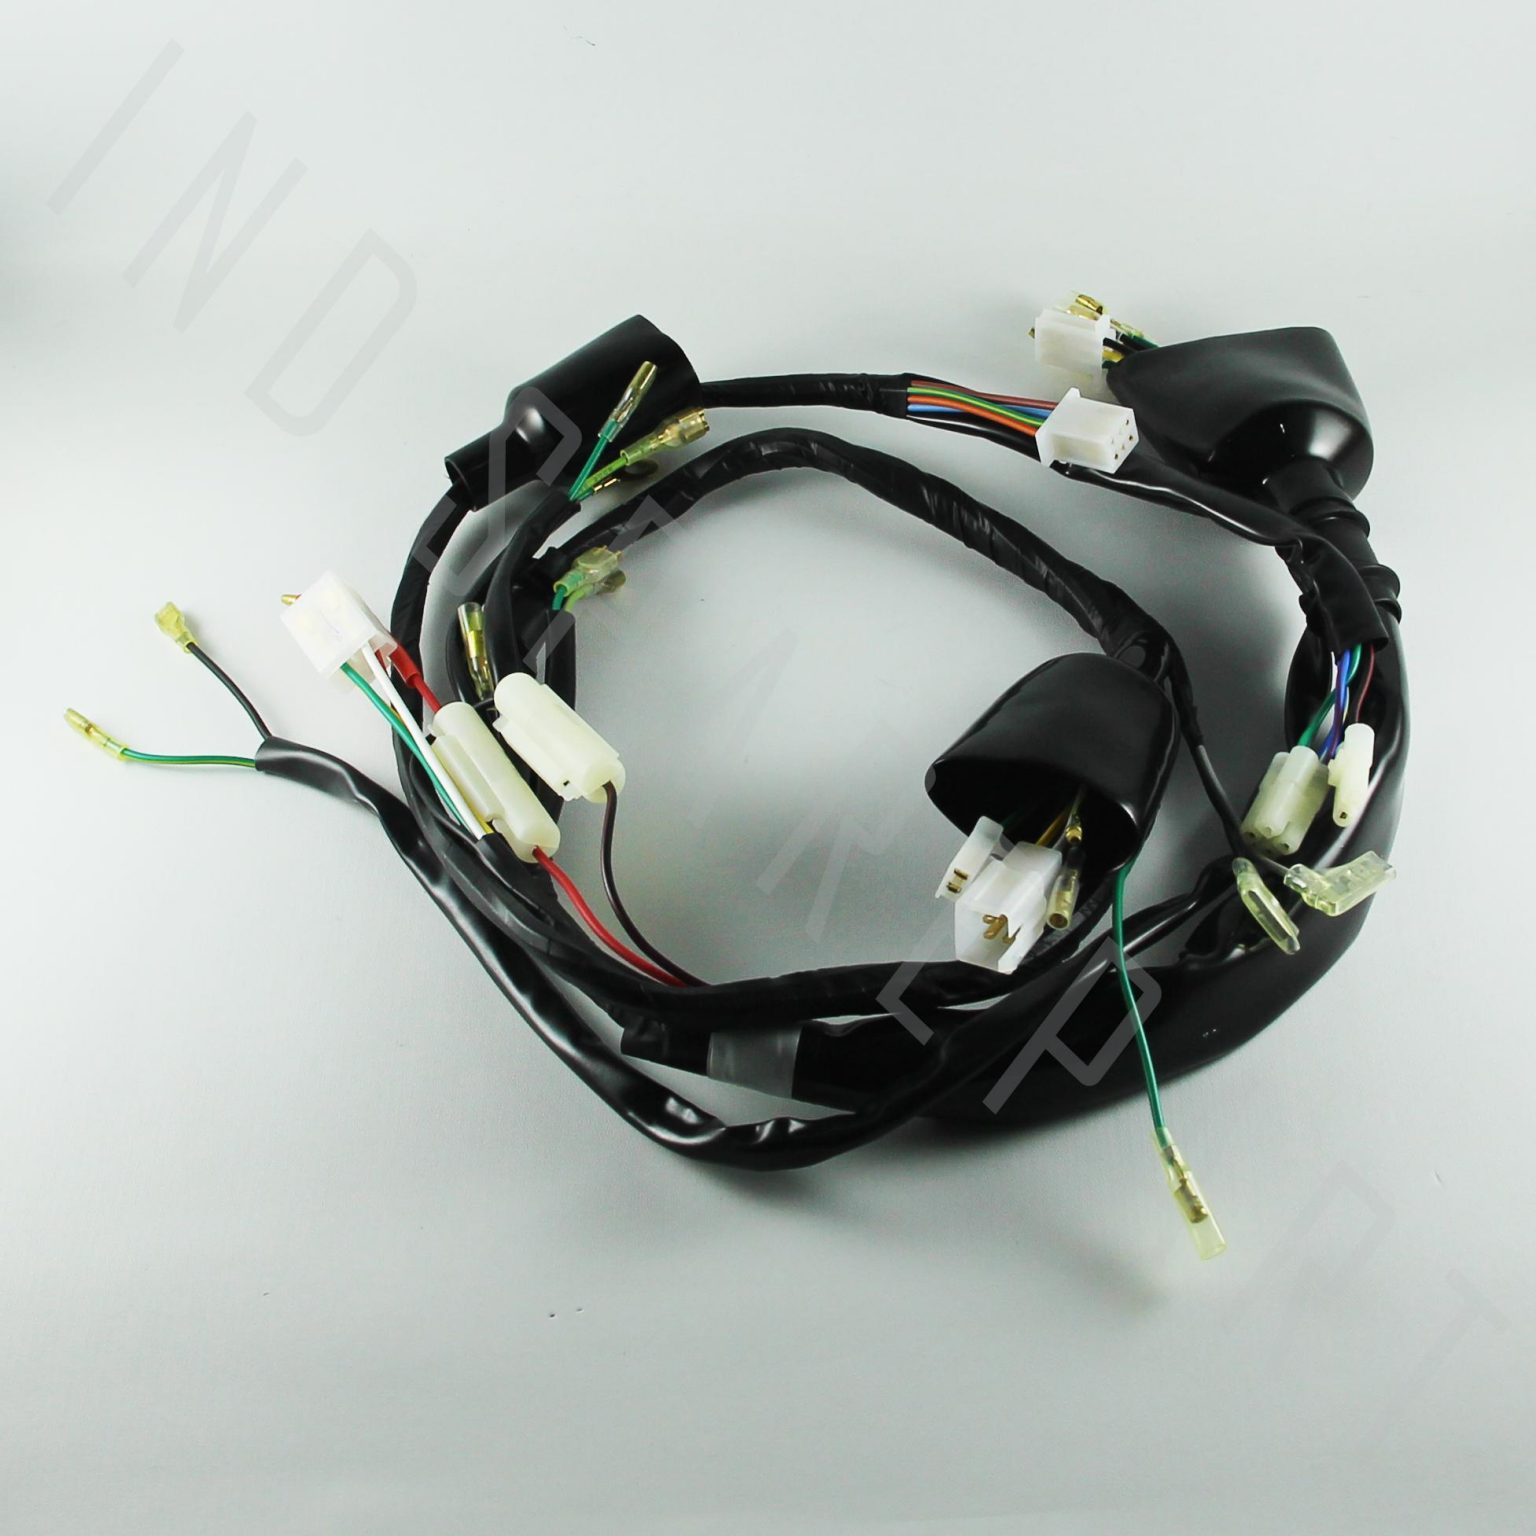  Kabel  Kable Cabel Cable Body Bodi Set Neotech GL  Max Pro  